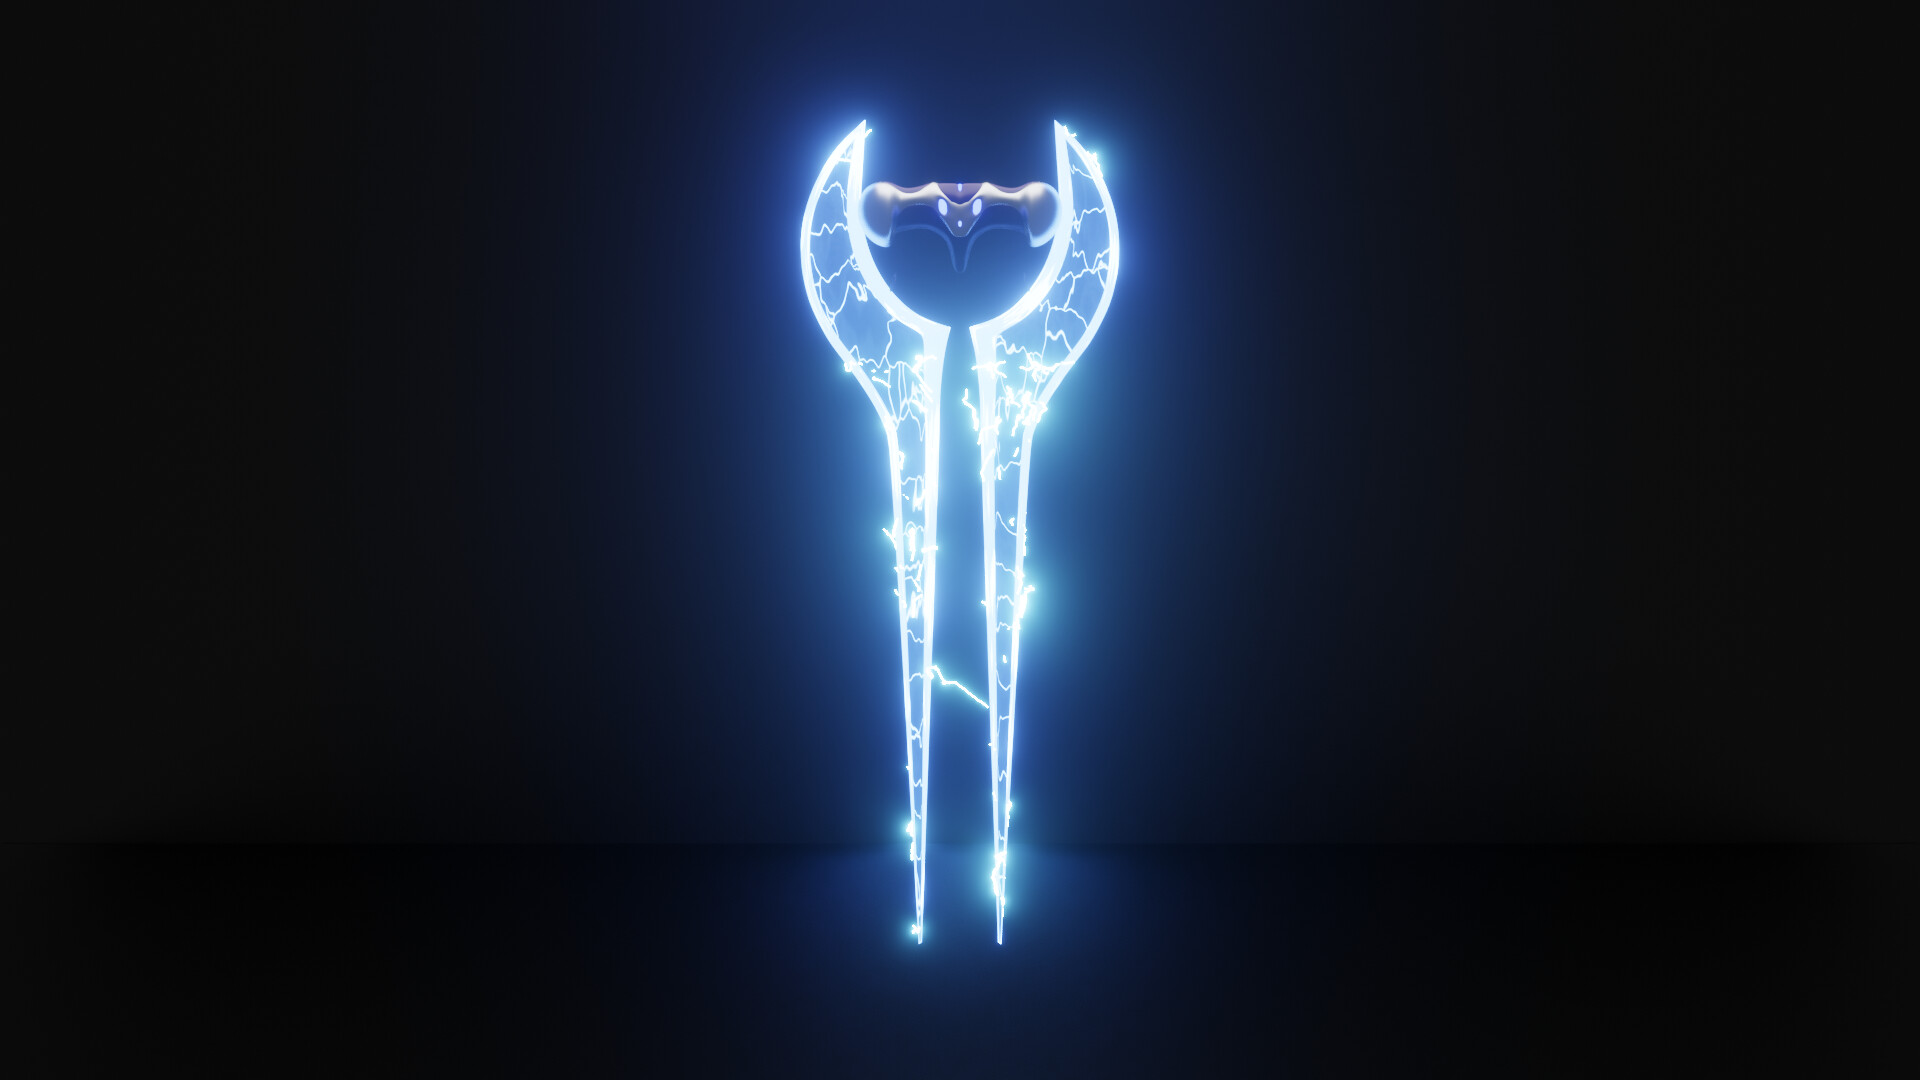 ArtStation - Halo 2 Energy sword